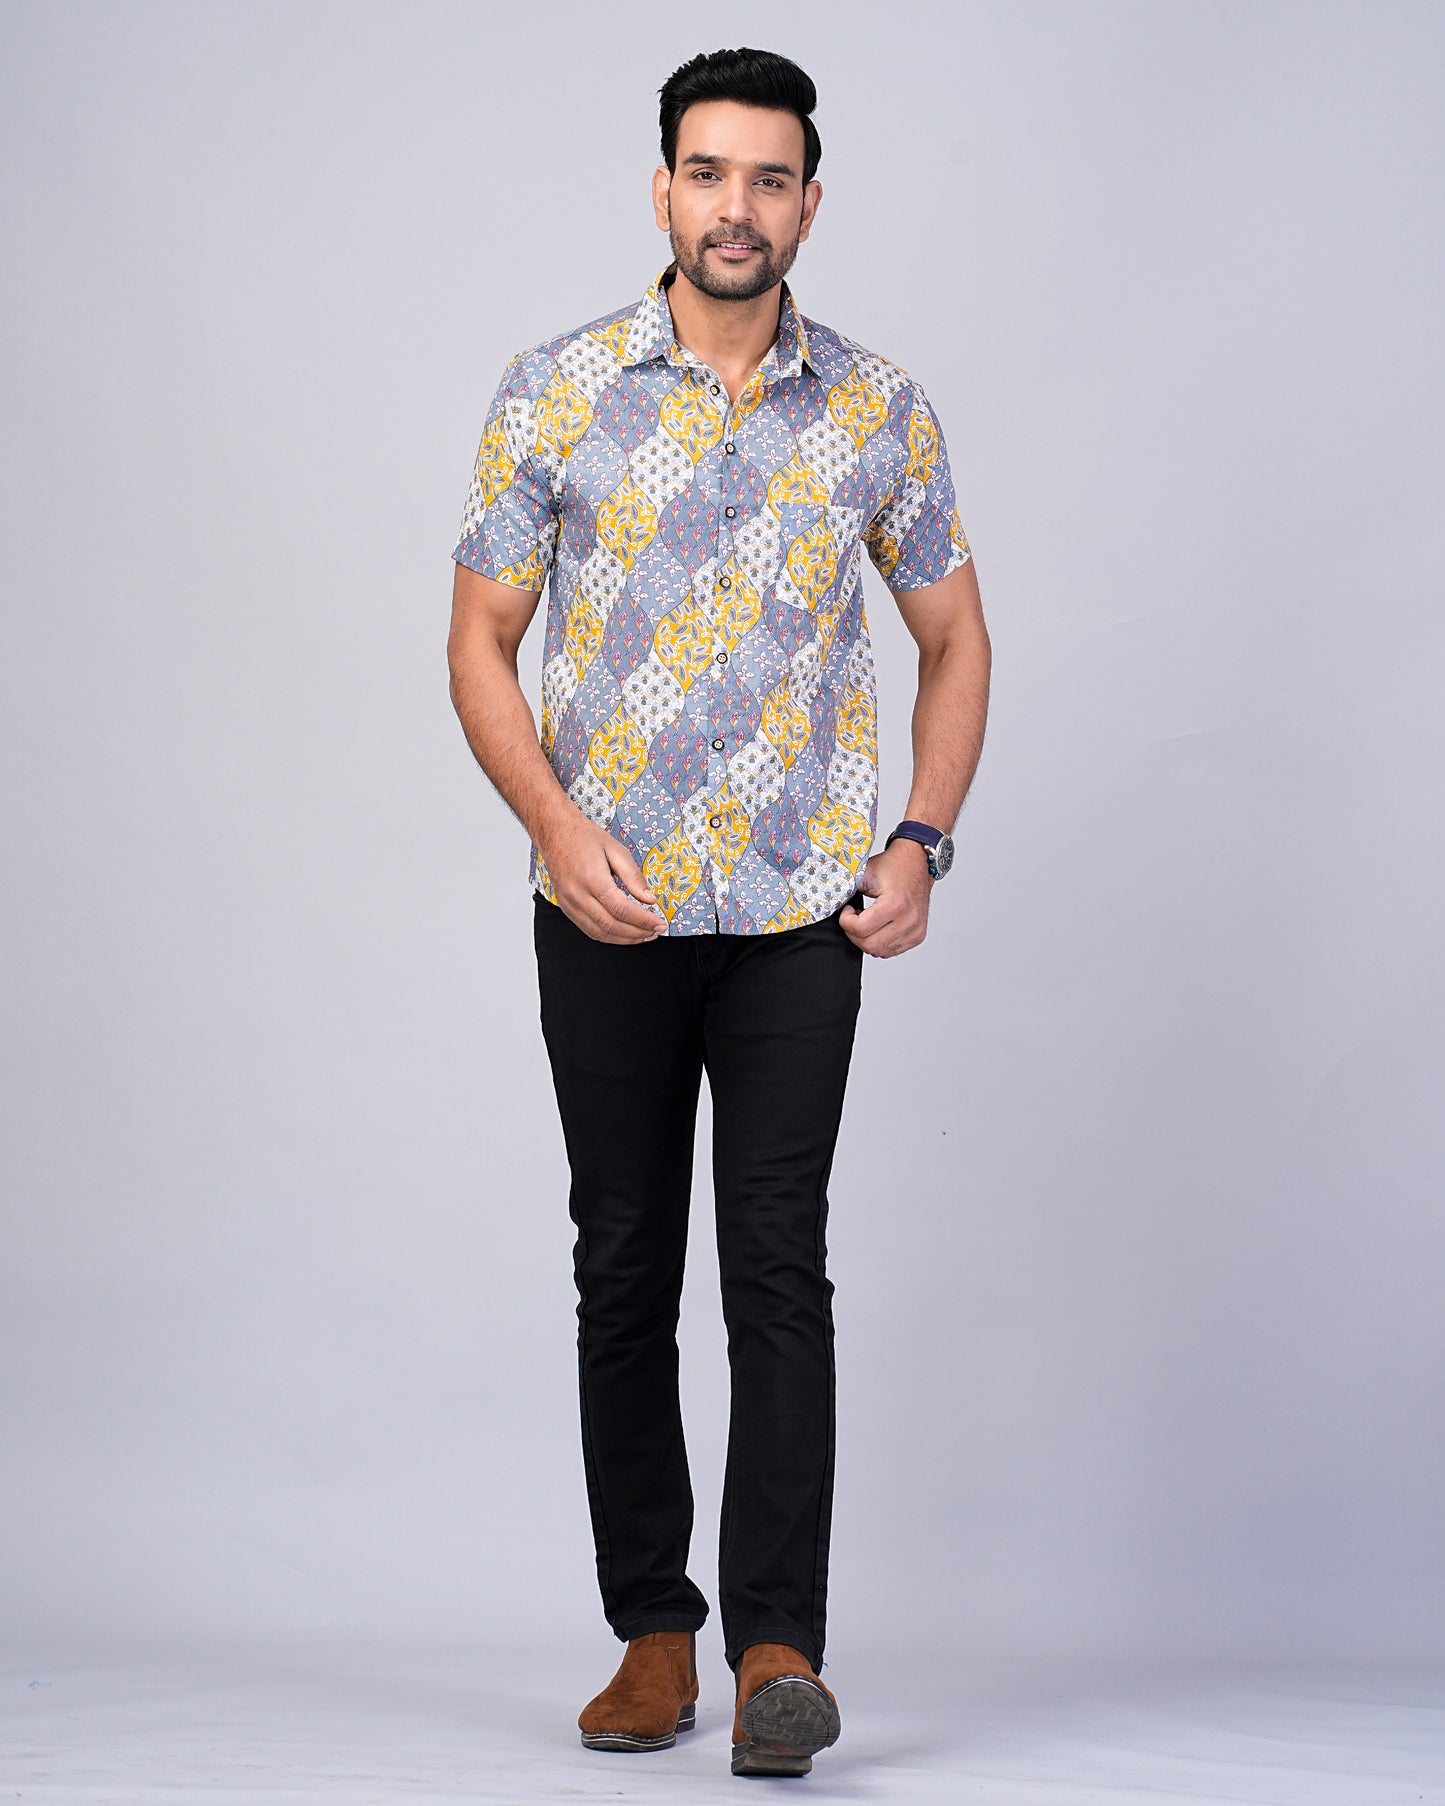 Men's Multi Color Floral Printed Half-Sleeves shirts